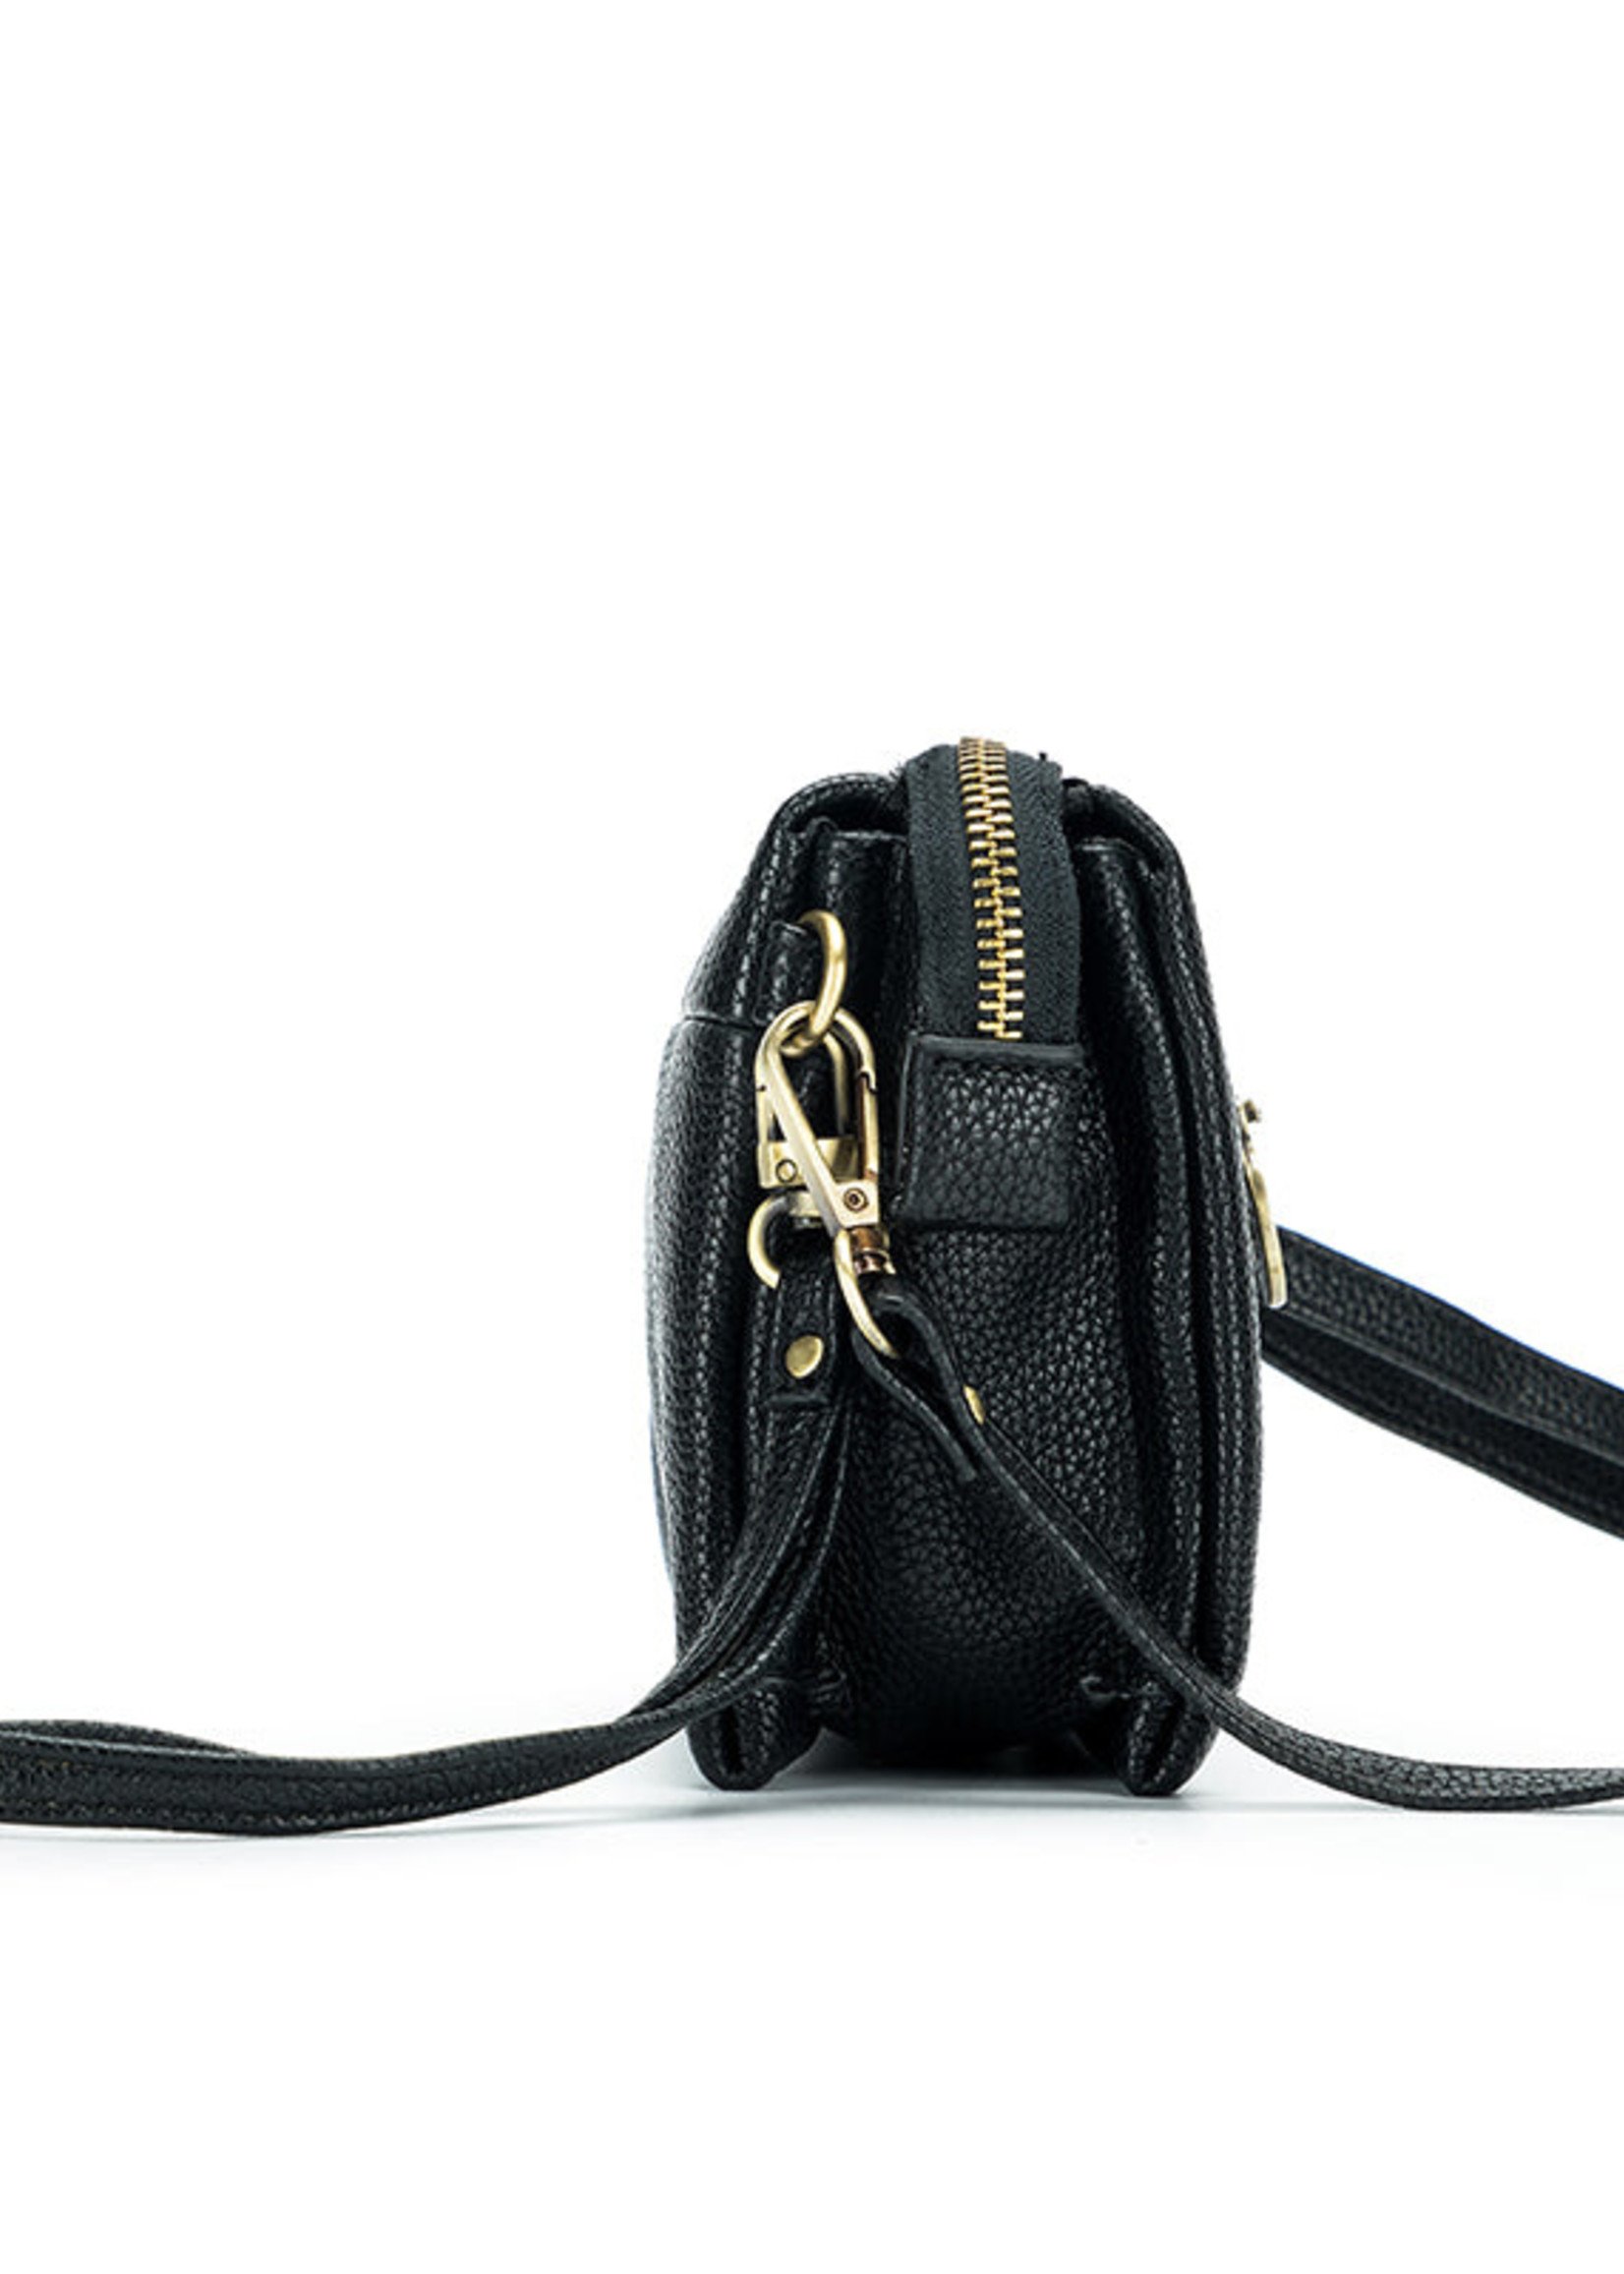 Black Caviar Stella Crossbody/Clutch Bag in Vegan Leather